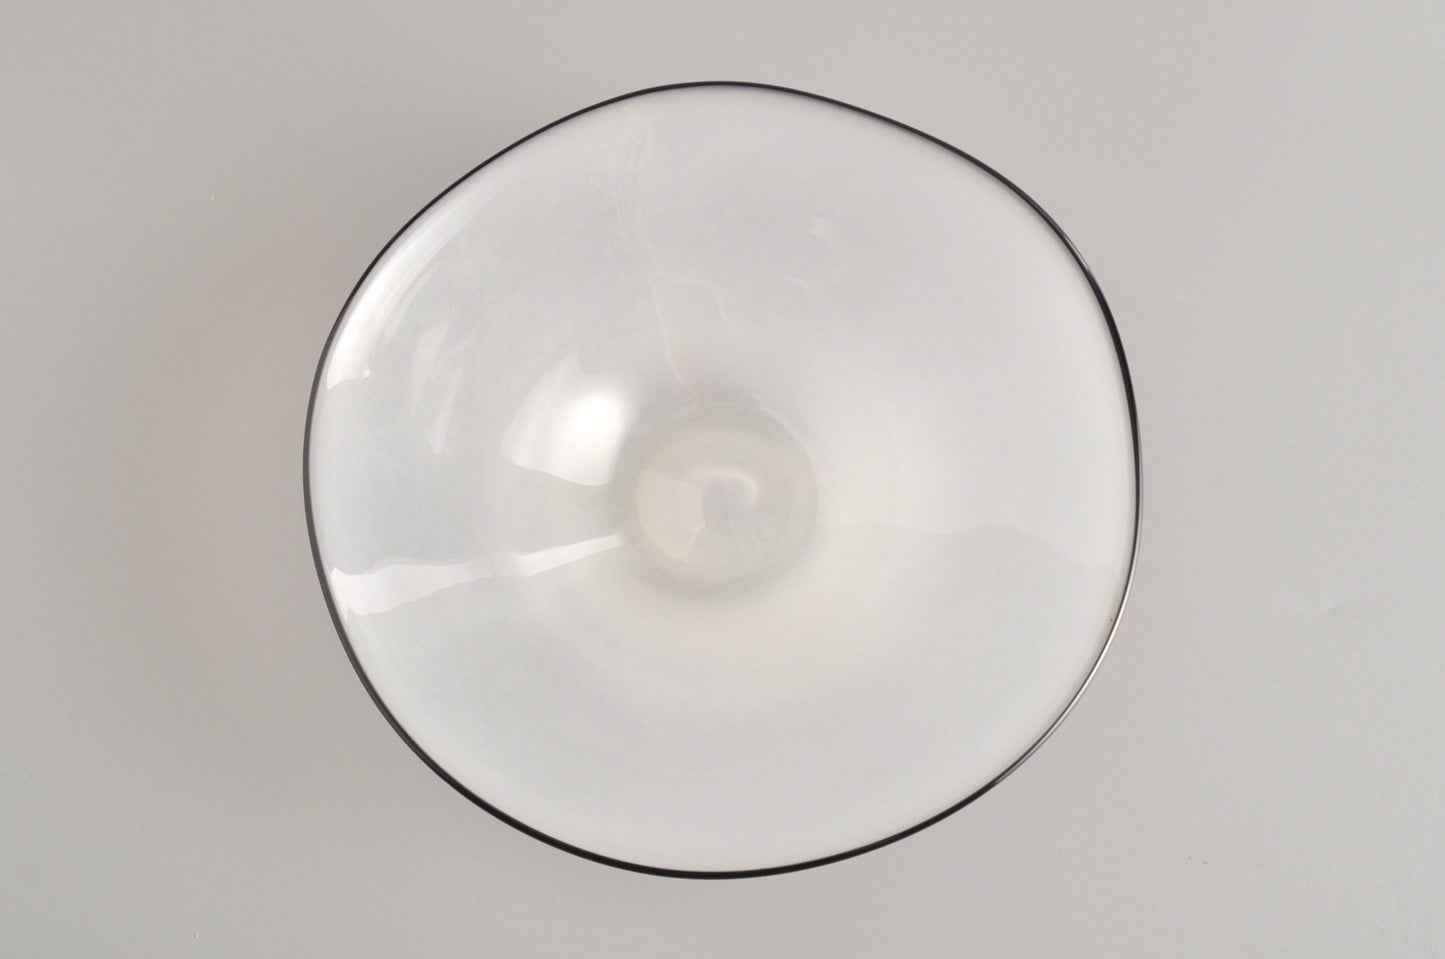 kasumi bowl S ivory 3801